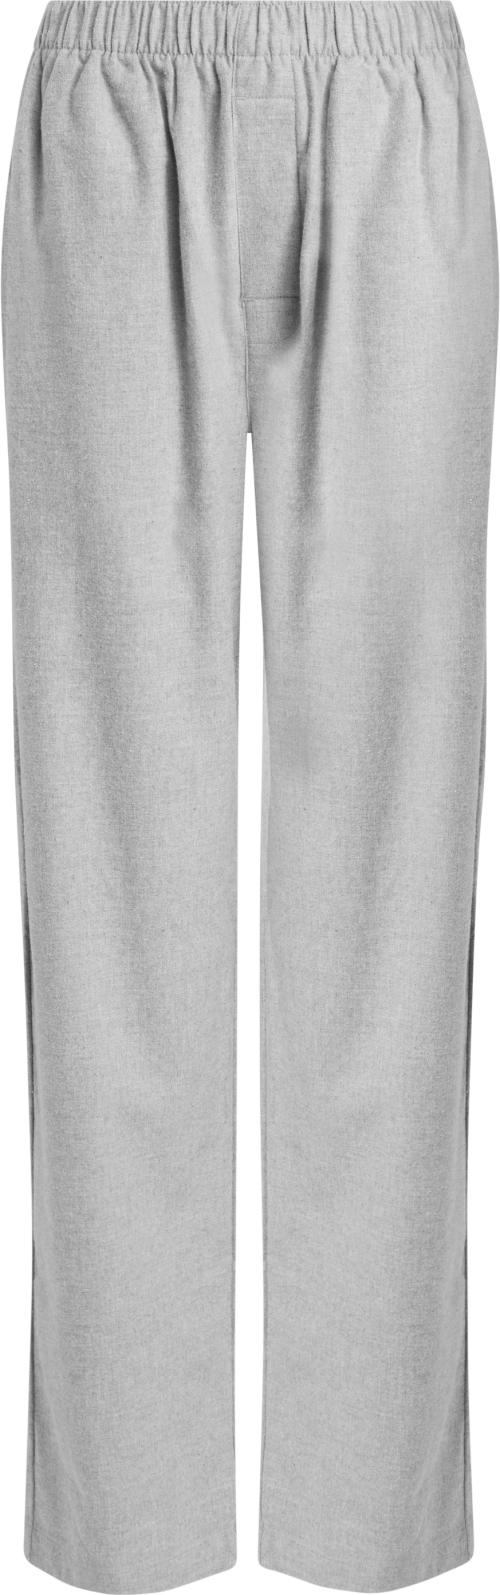 Calvin Klein Pure Flannel Sleep Pant